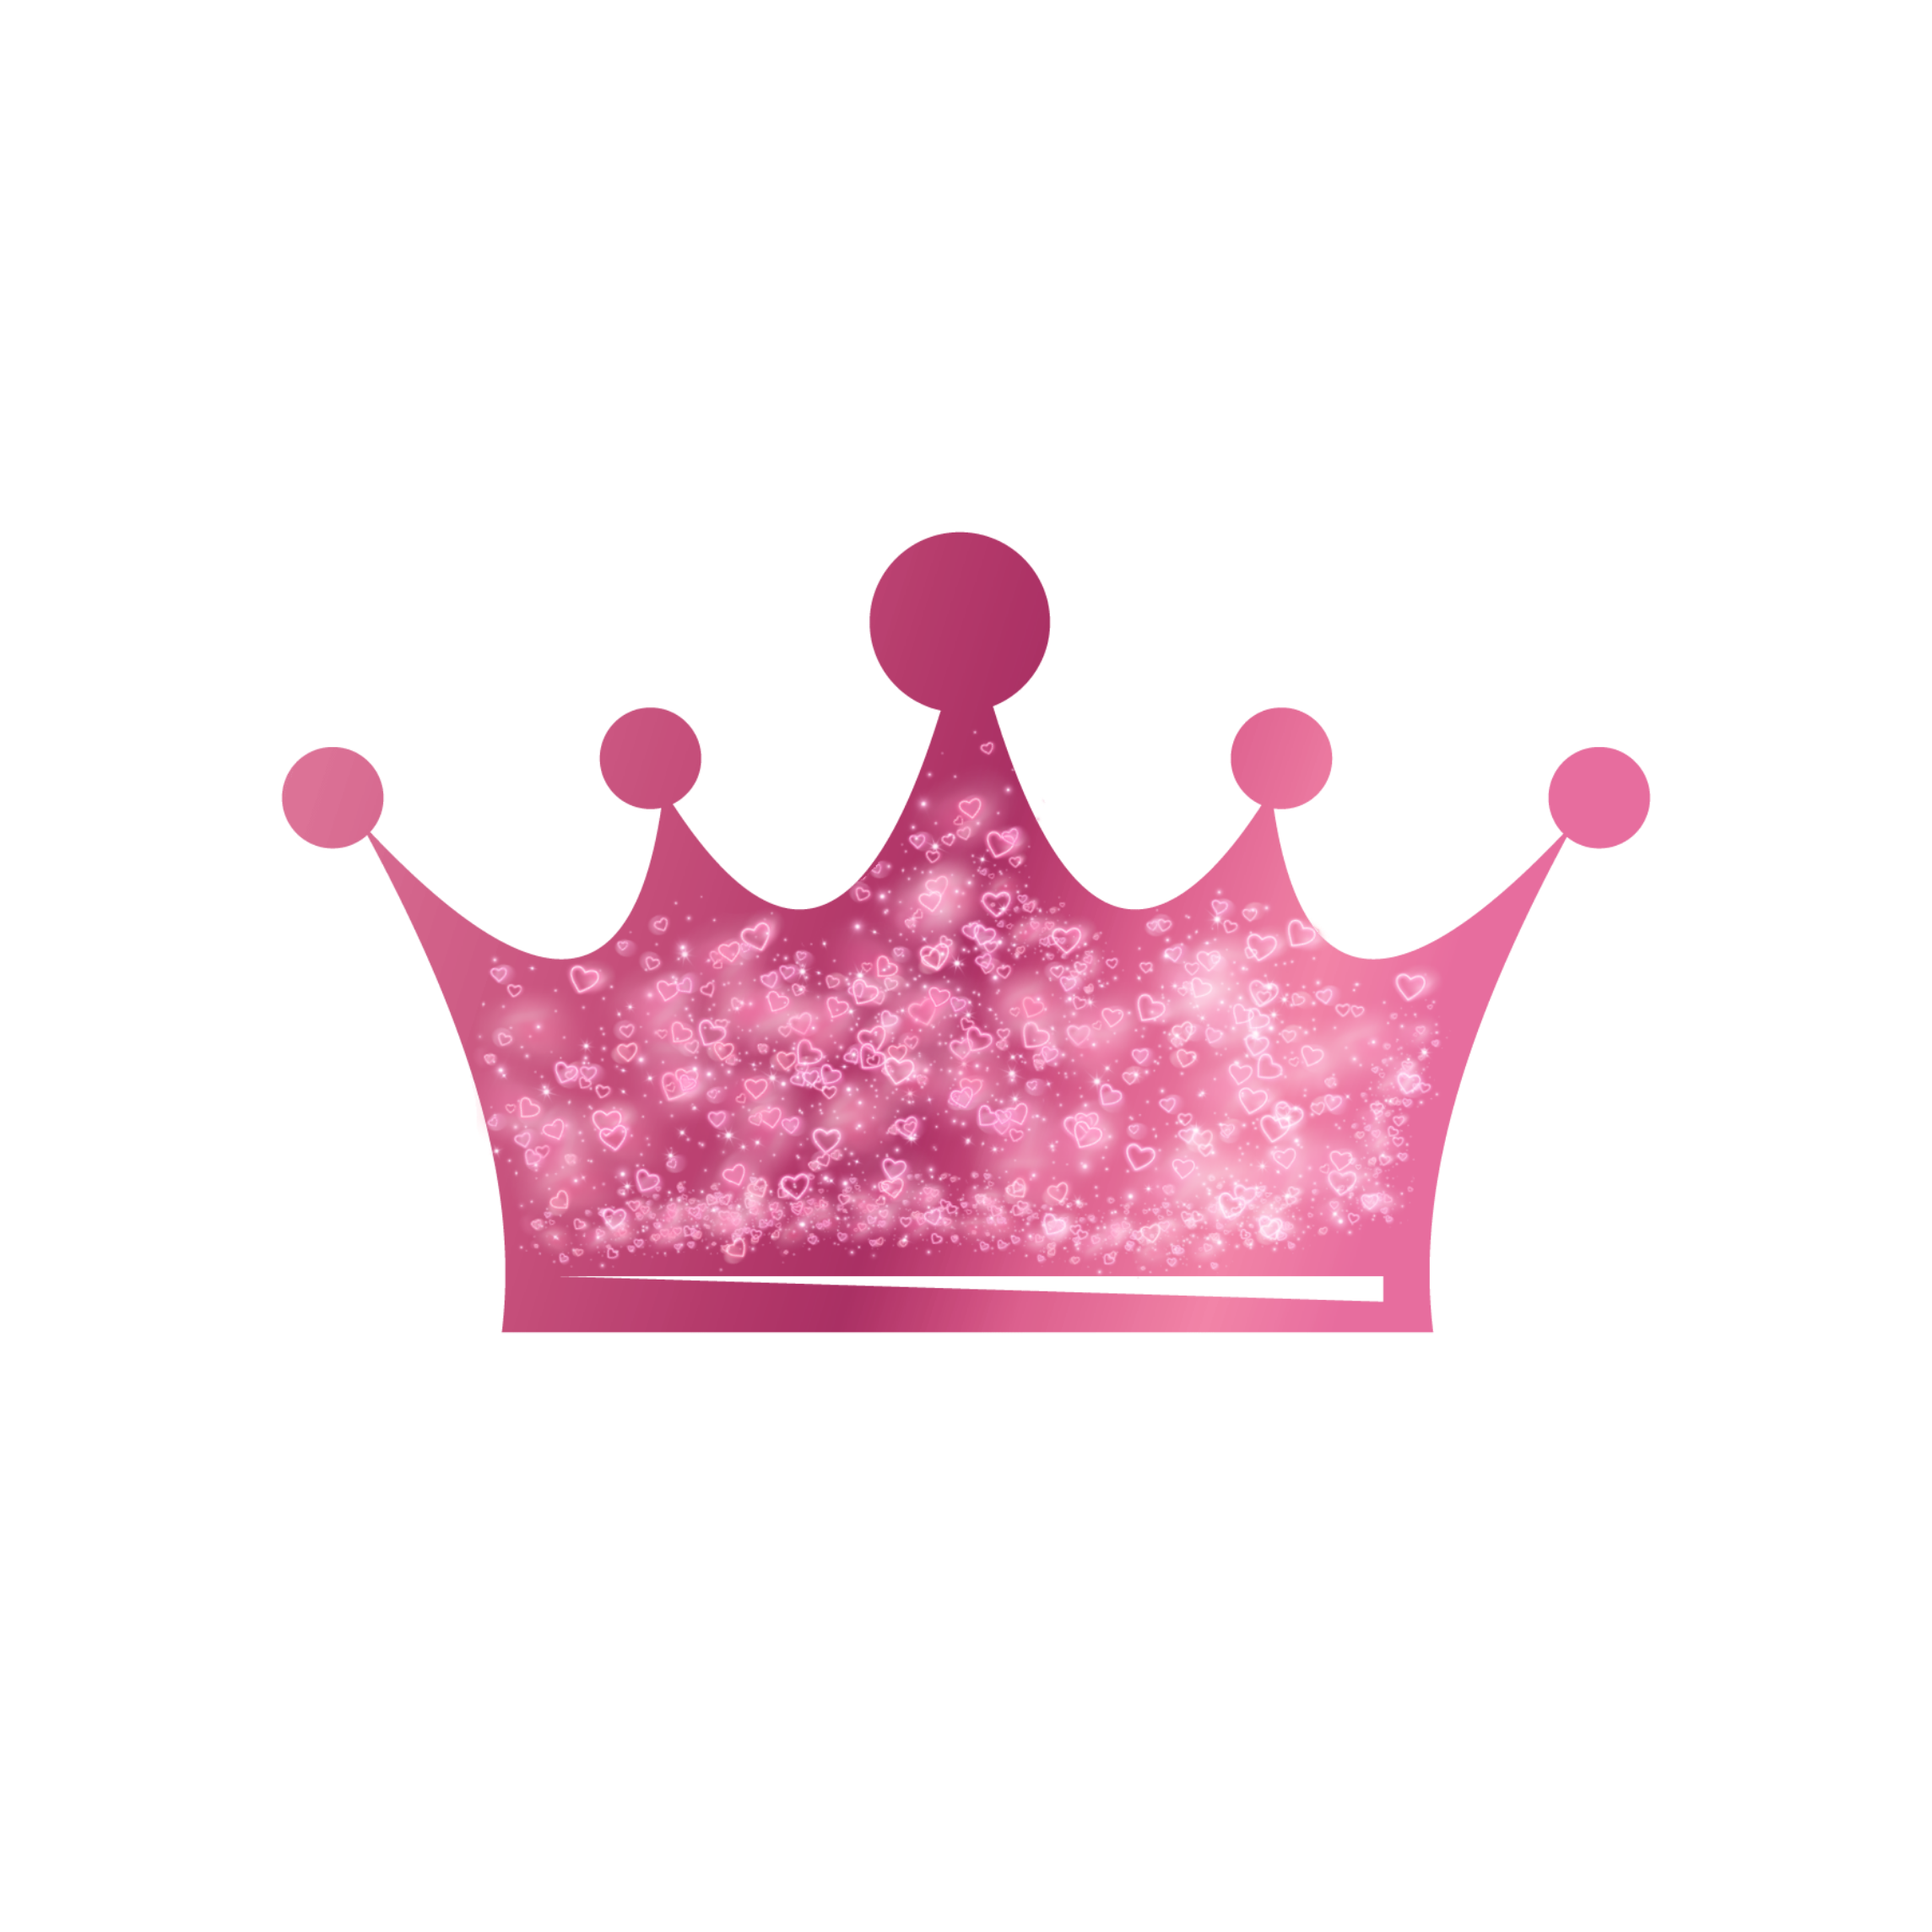 pink queen picsart instagram twitter facebook fashion... - 2289 x 2289 png 761kB